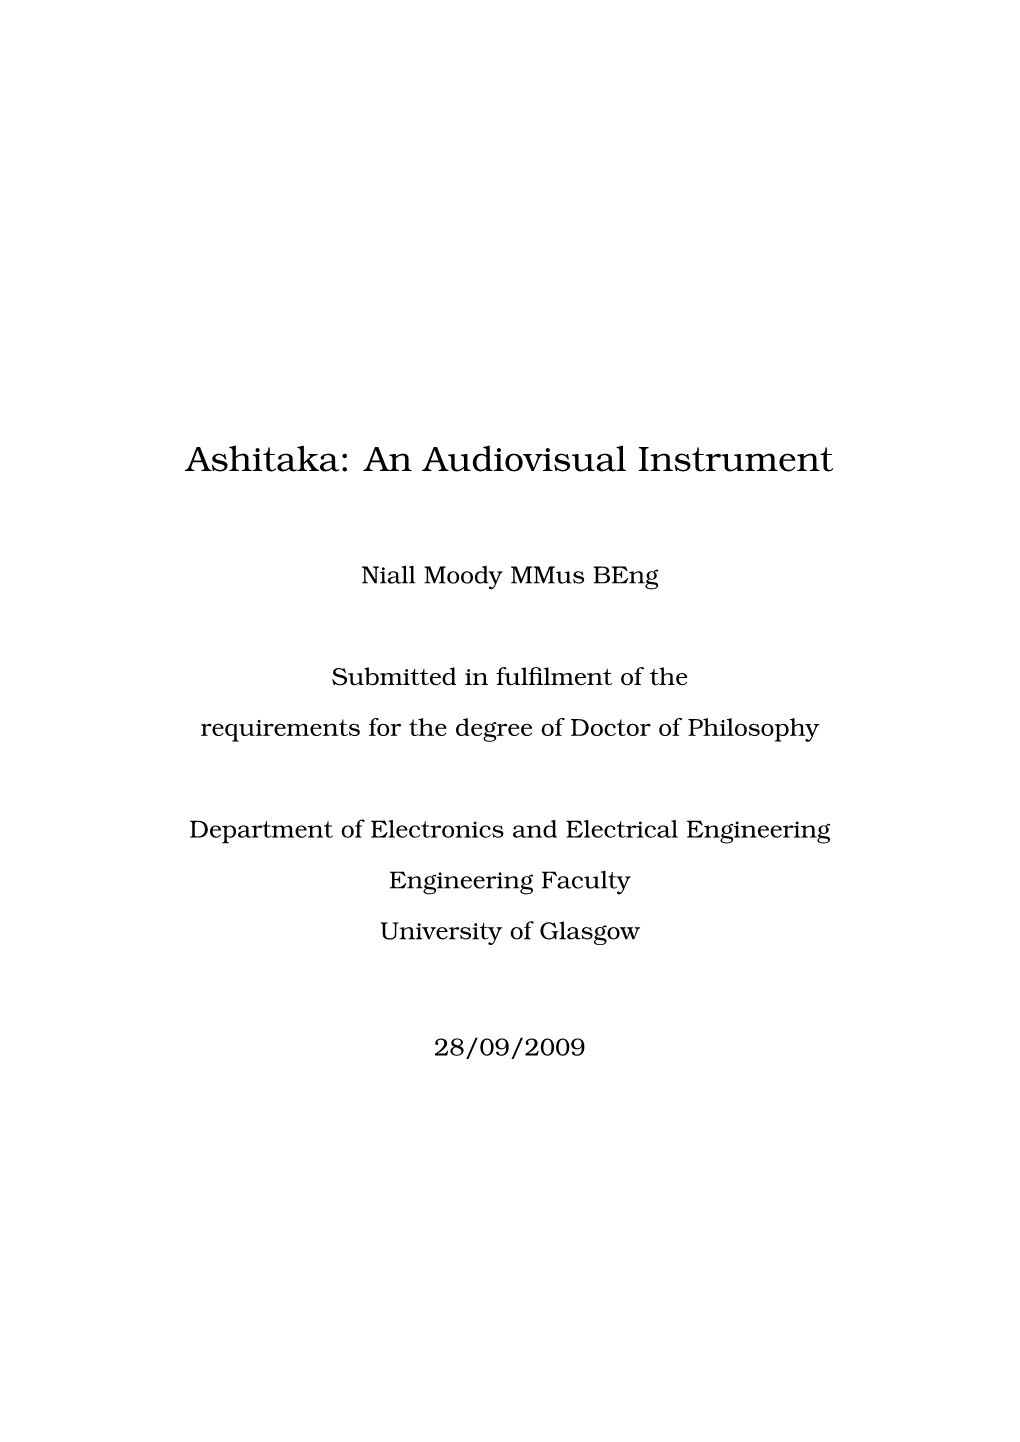 Ashitaka: an Audiovisual Instrument